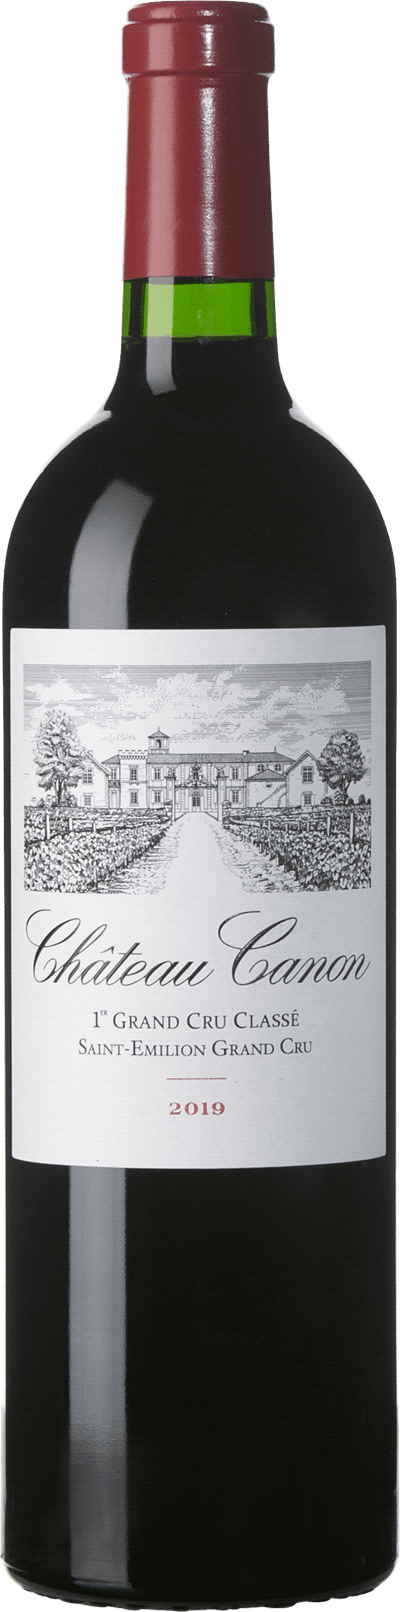 Château Canon 